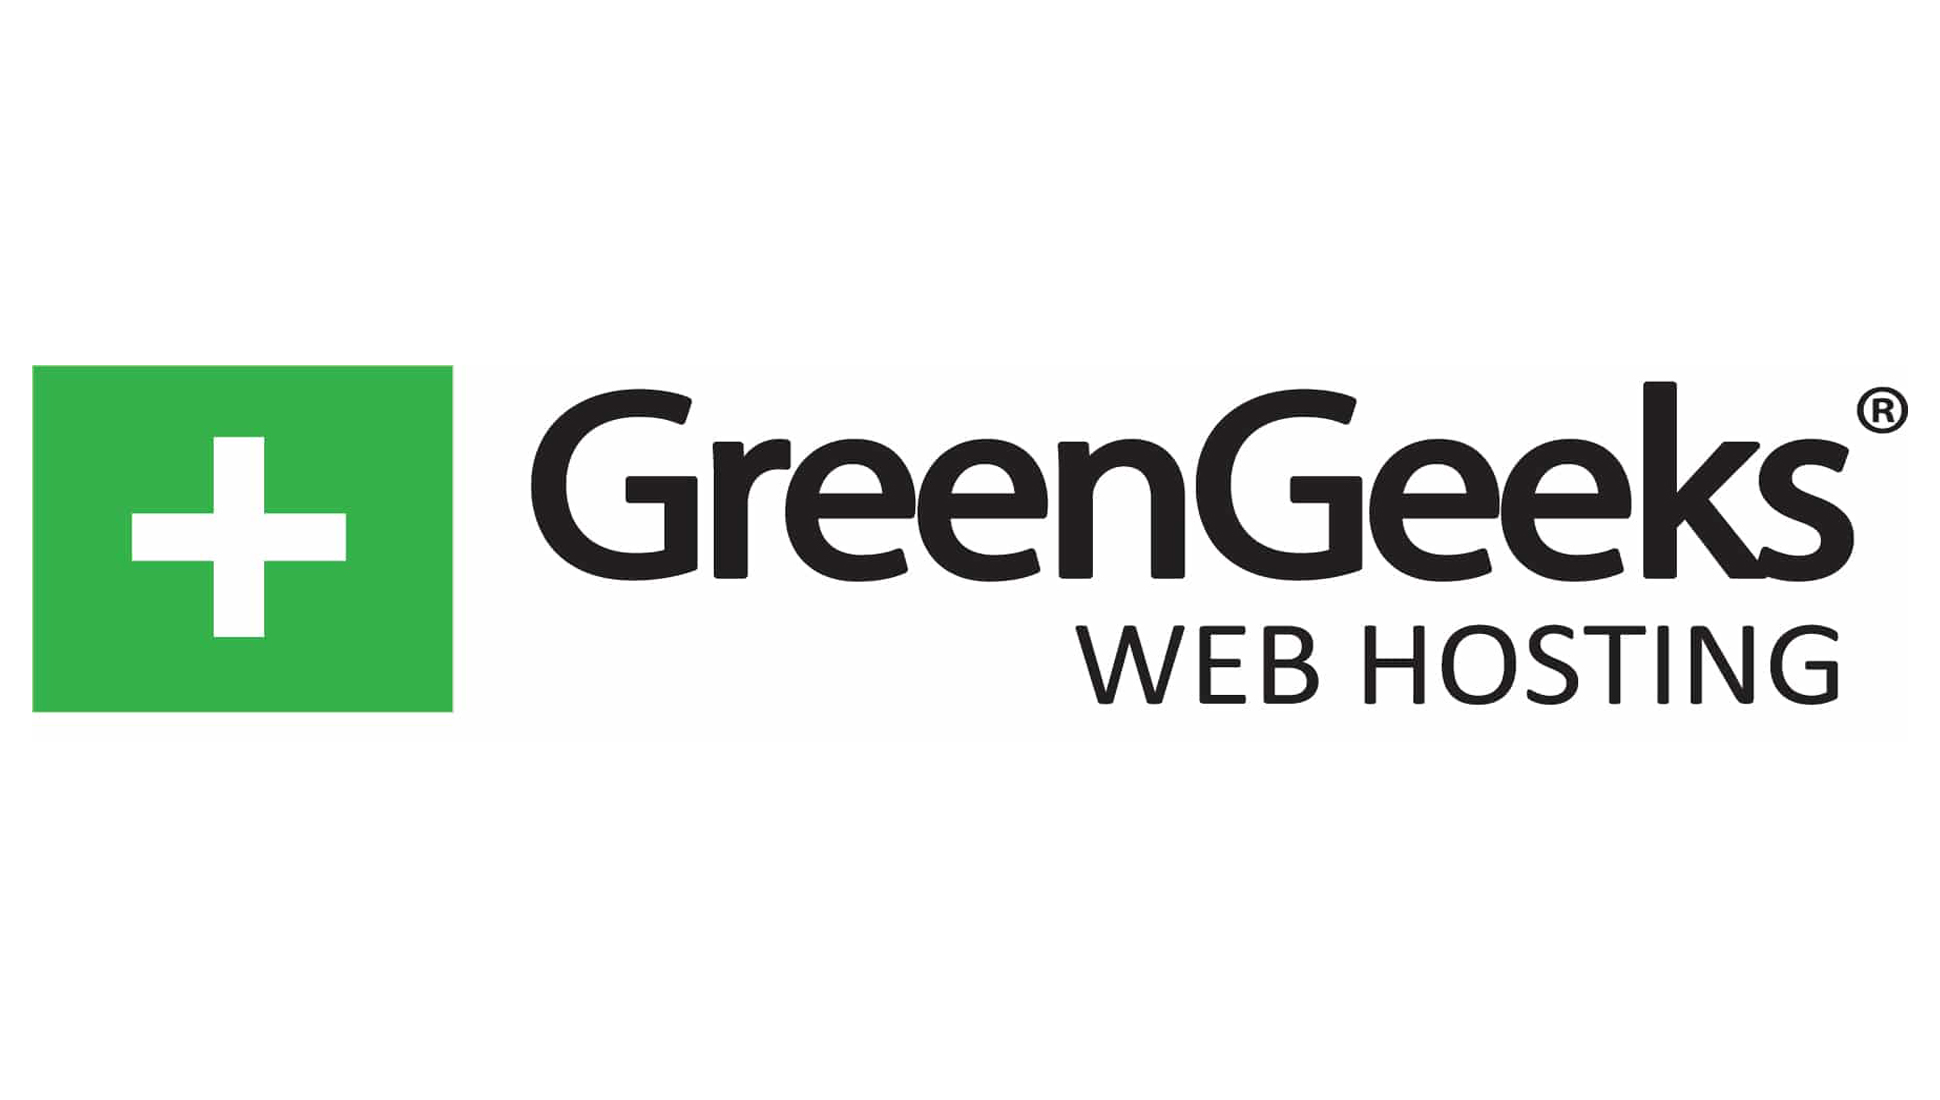 greengeeks web hosting review | itproportal